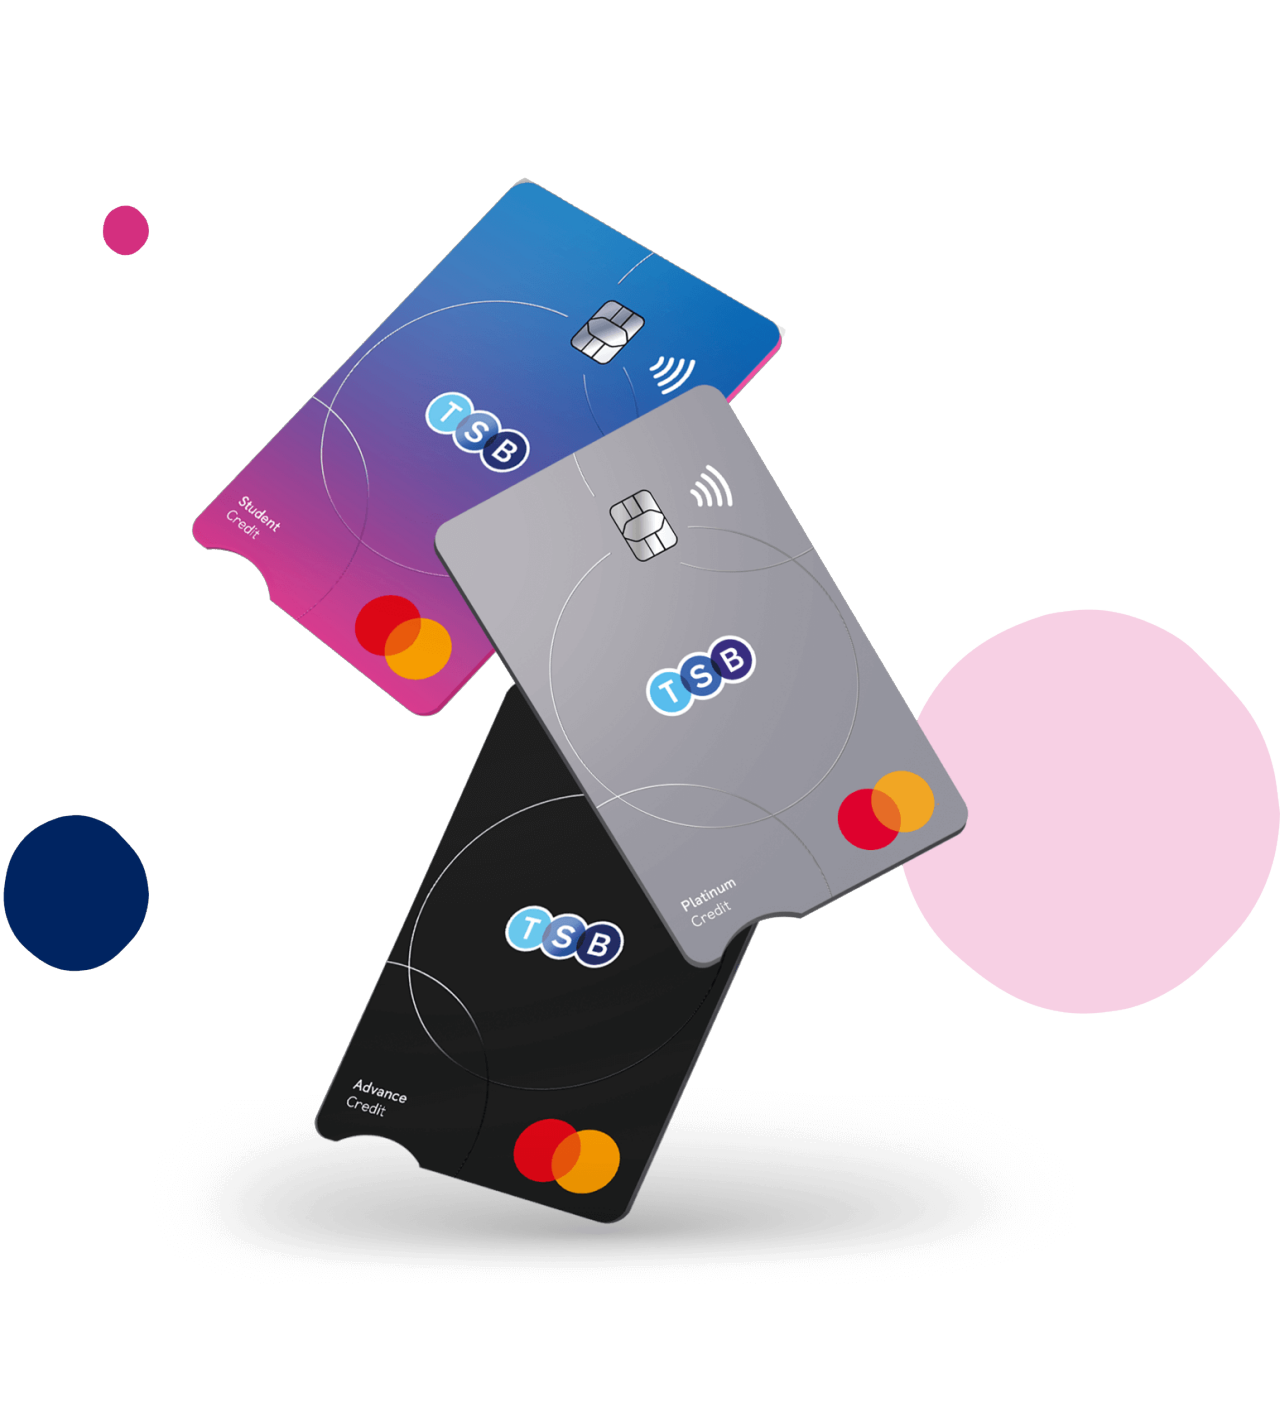 Three illustrated TSB credit cards.